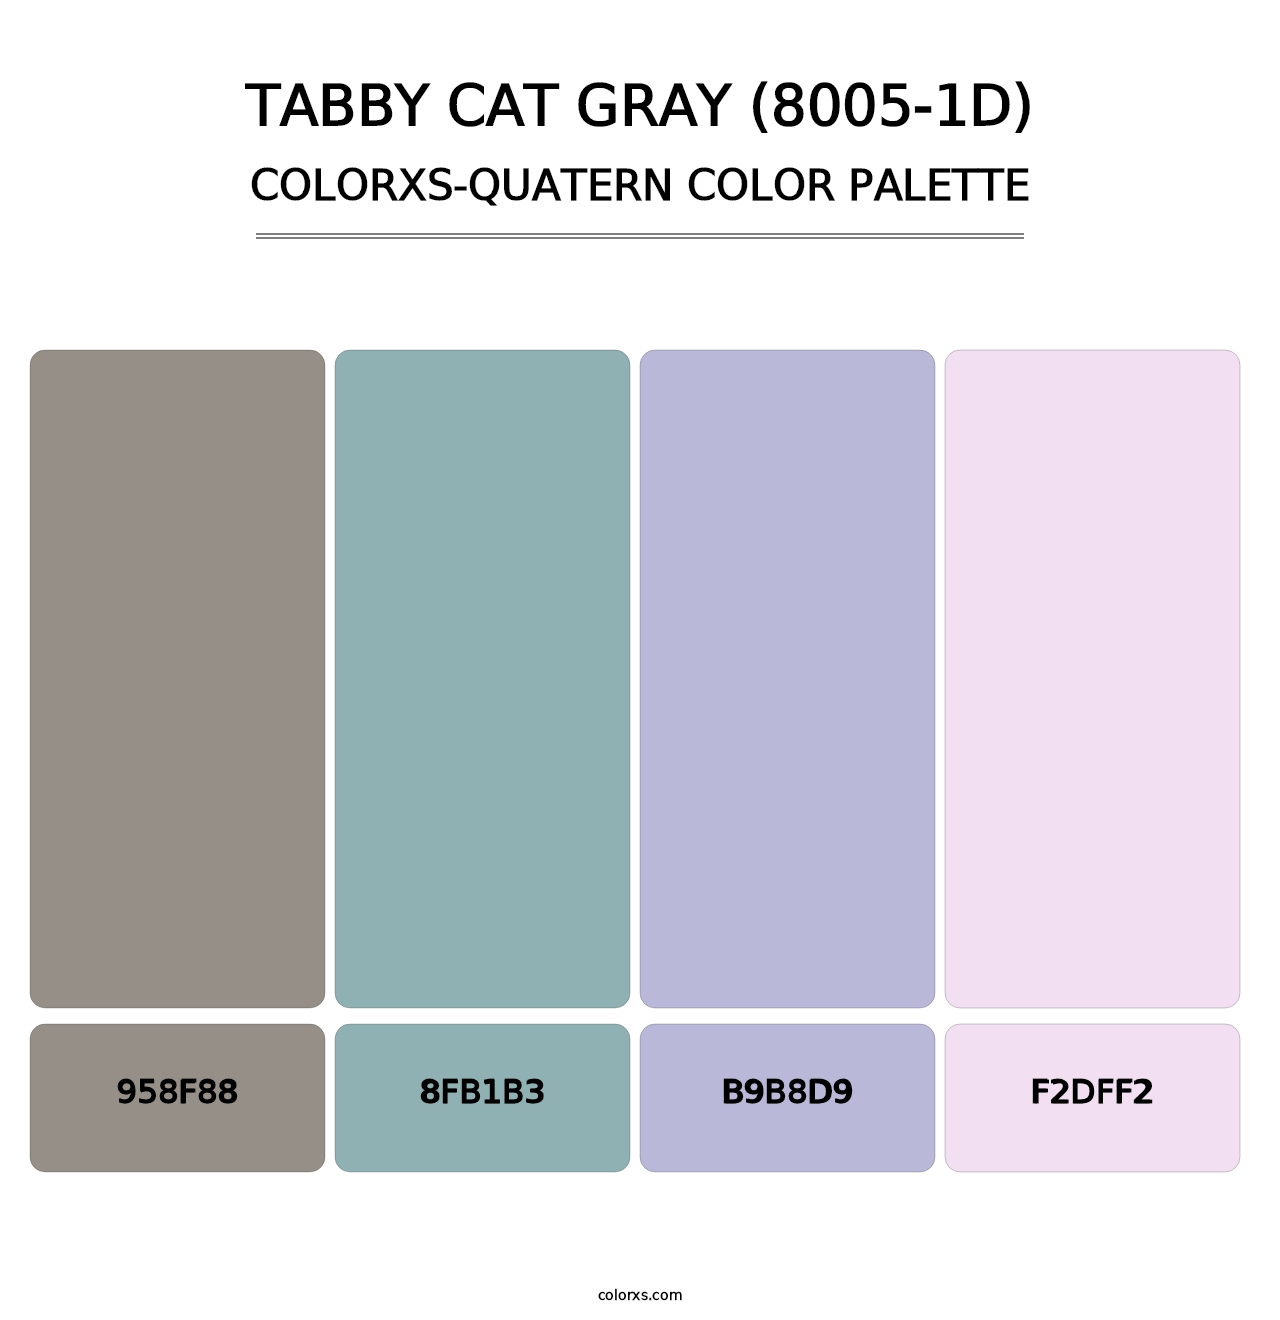 Tabby Cat Gray (8005-1D) - Colorxs Quatern Palette